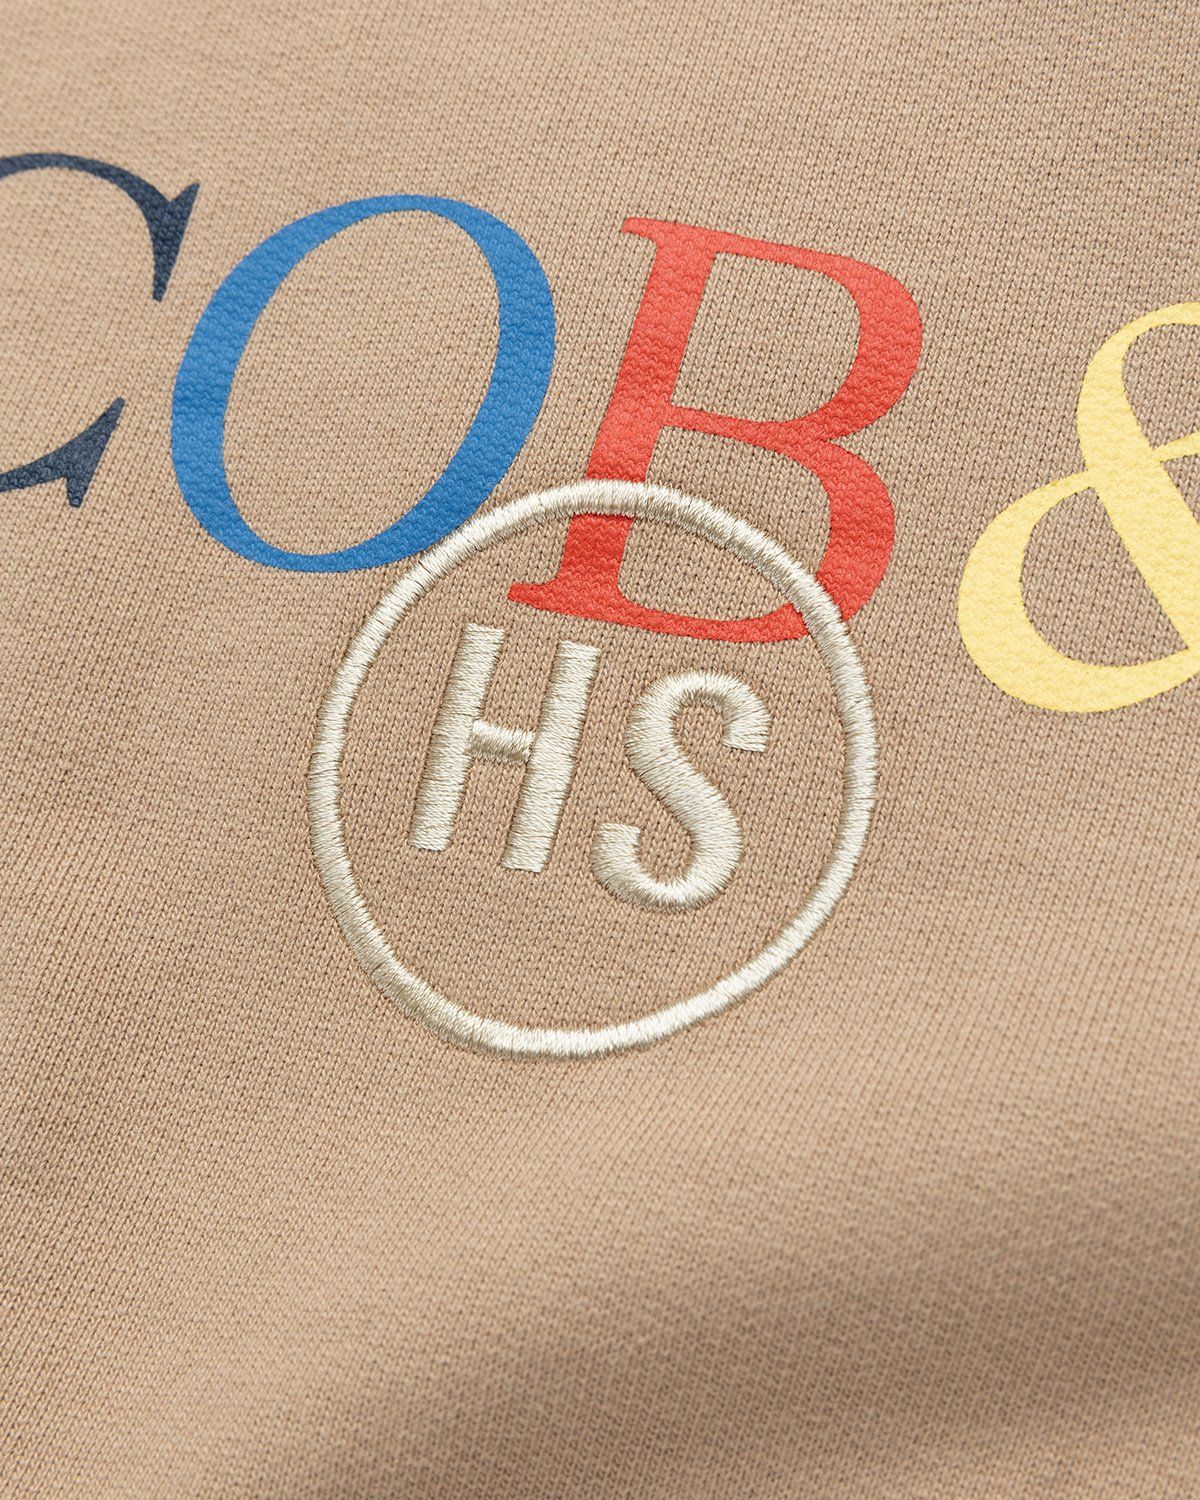 Jacob & Co. x Highsnobiety – Multicolor Logo Fleece Hoodie Brown - Image 3